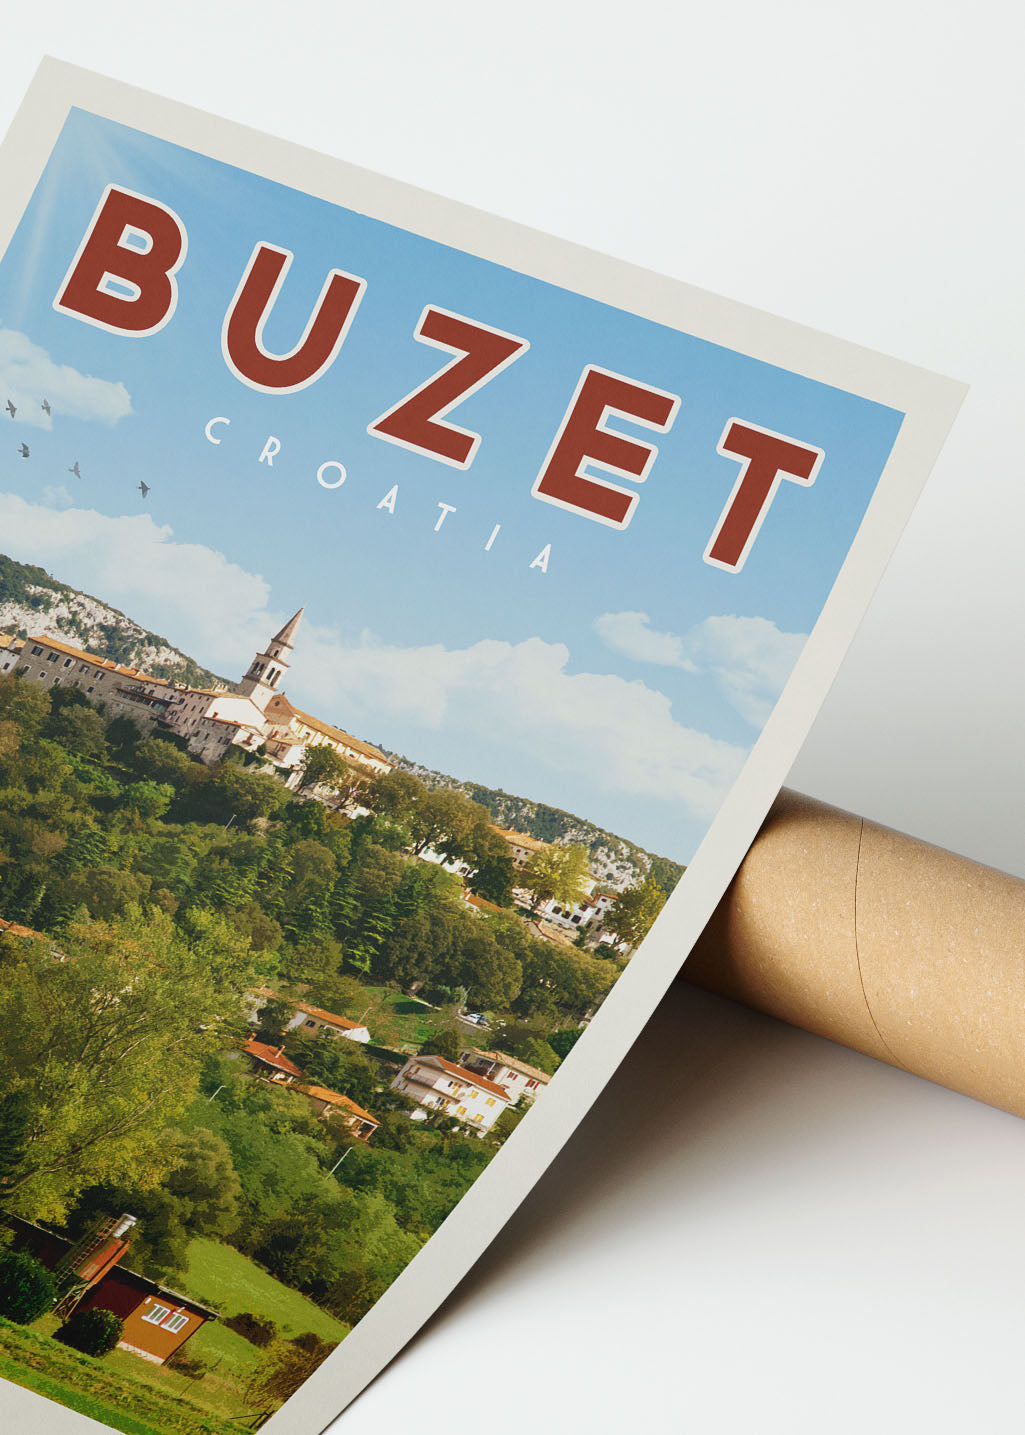 Buzet, Croatia - Vintage Travel Print